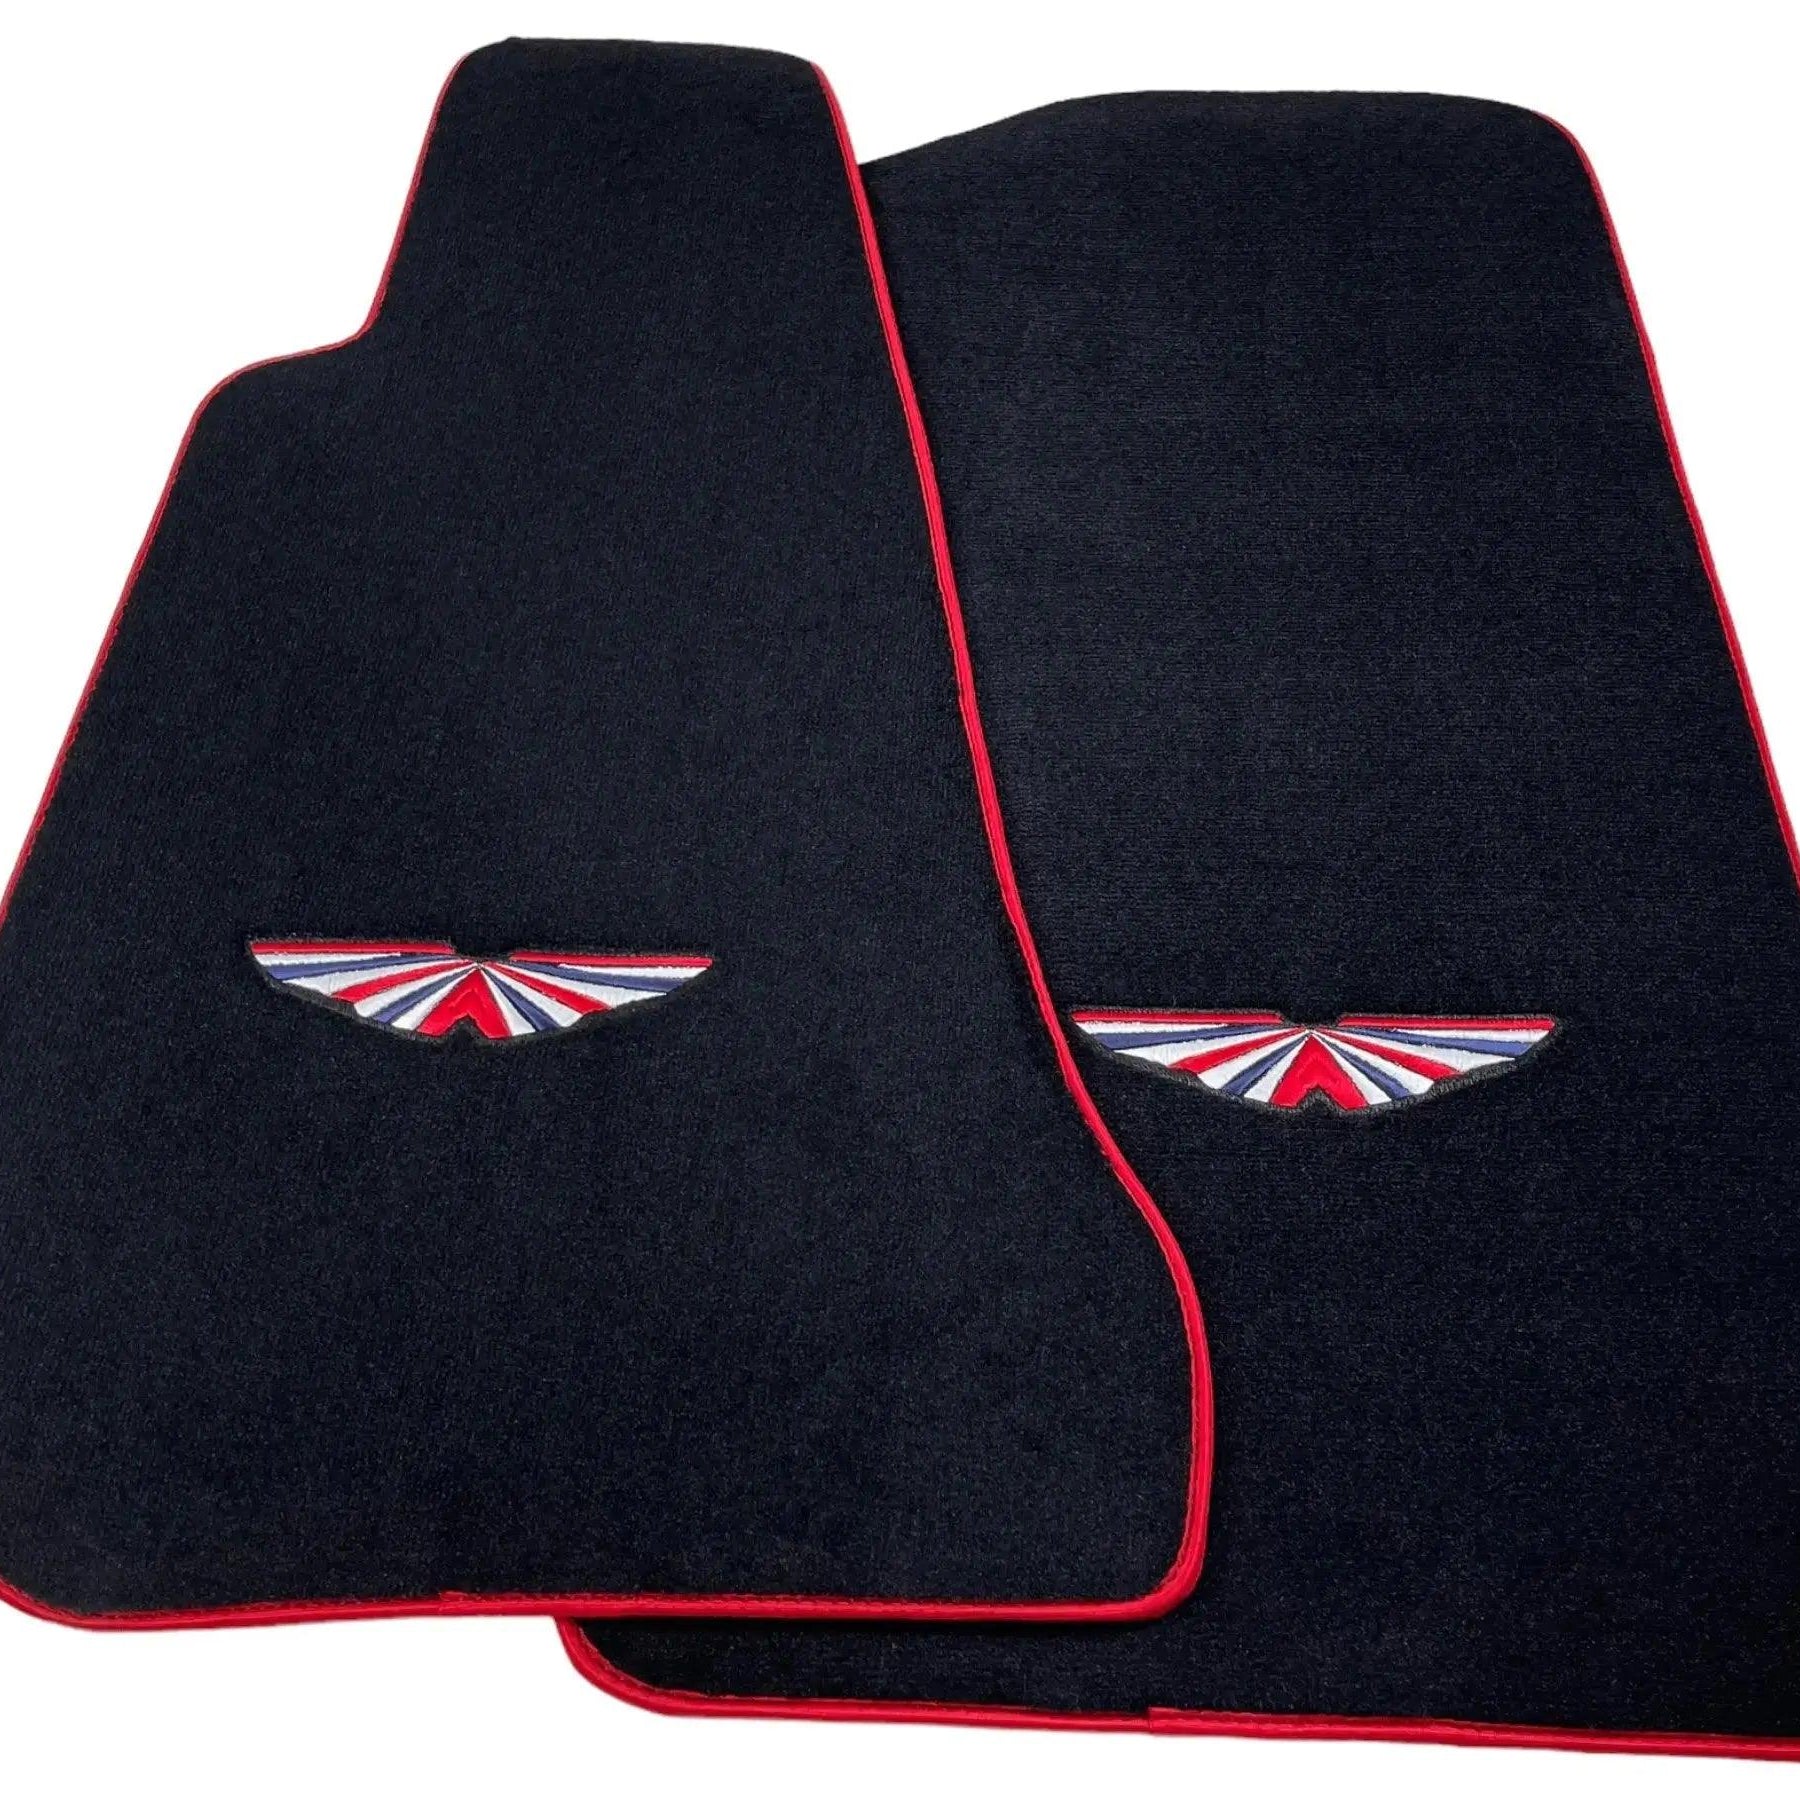 Black Floor Mats For Aston Martin V12 Vanquish (2001–2007) 2-door Coupe with Red Trim